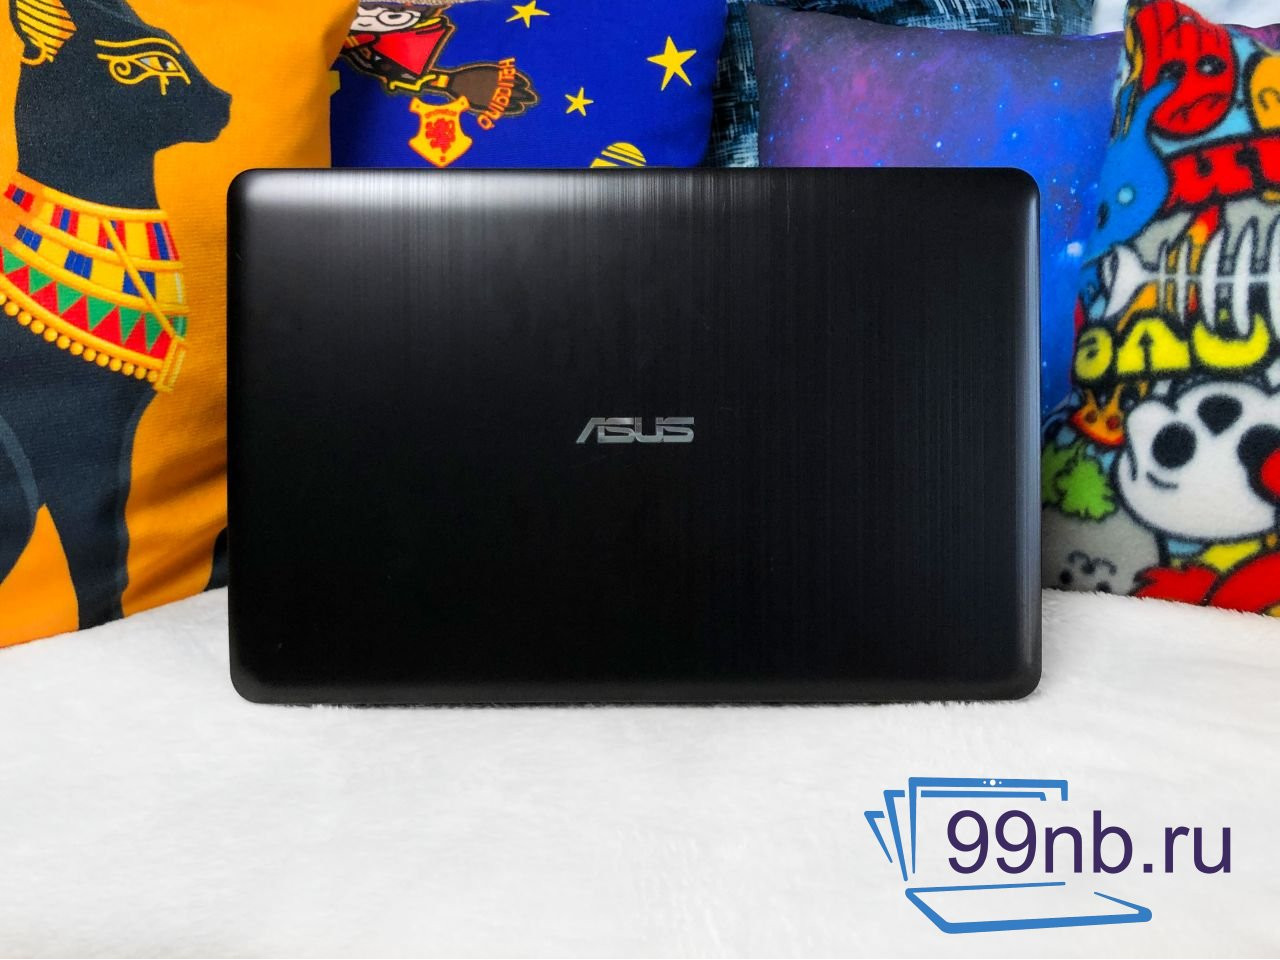  Аренда/лизинг ноутбука Asus 8 Gb ОЗУ+SSD